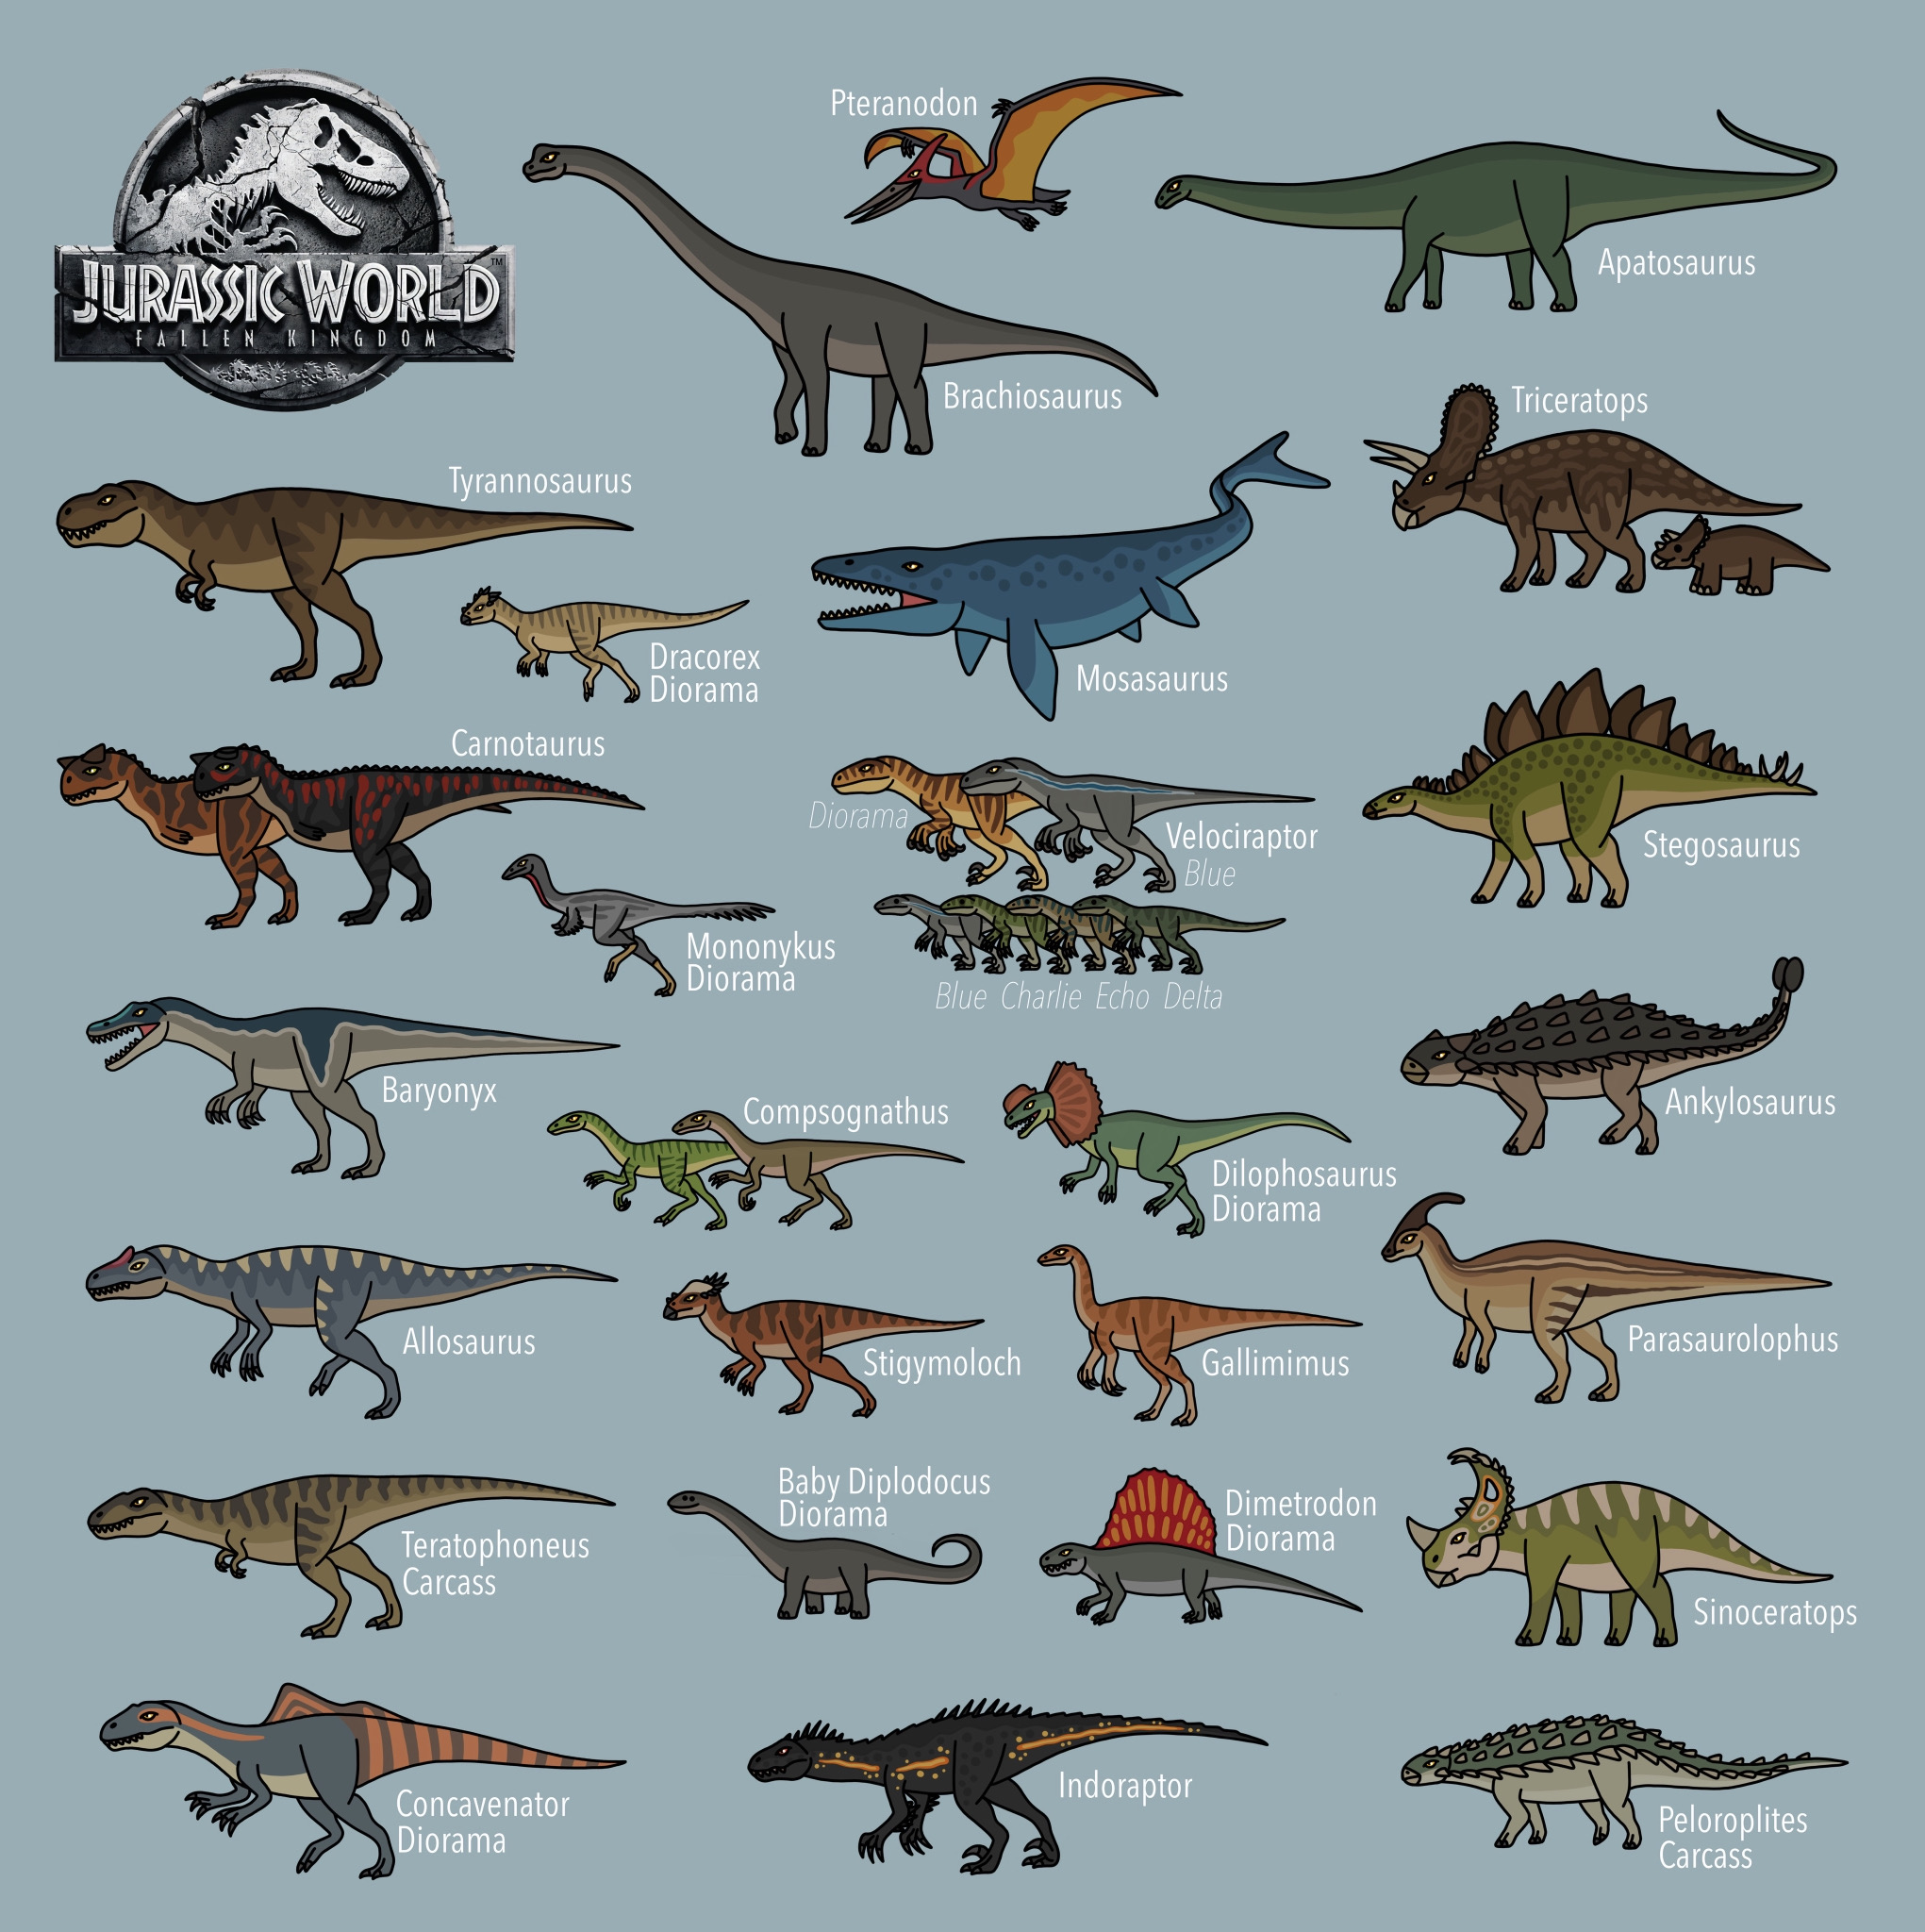 Jurassic World fallen Kingdom all dinosaurs by bestomator1111 on DeviantArt